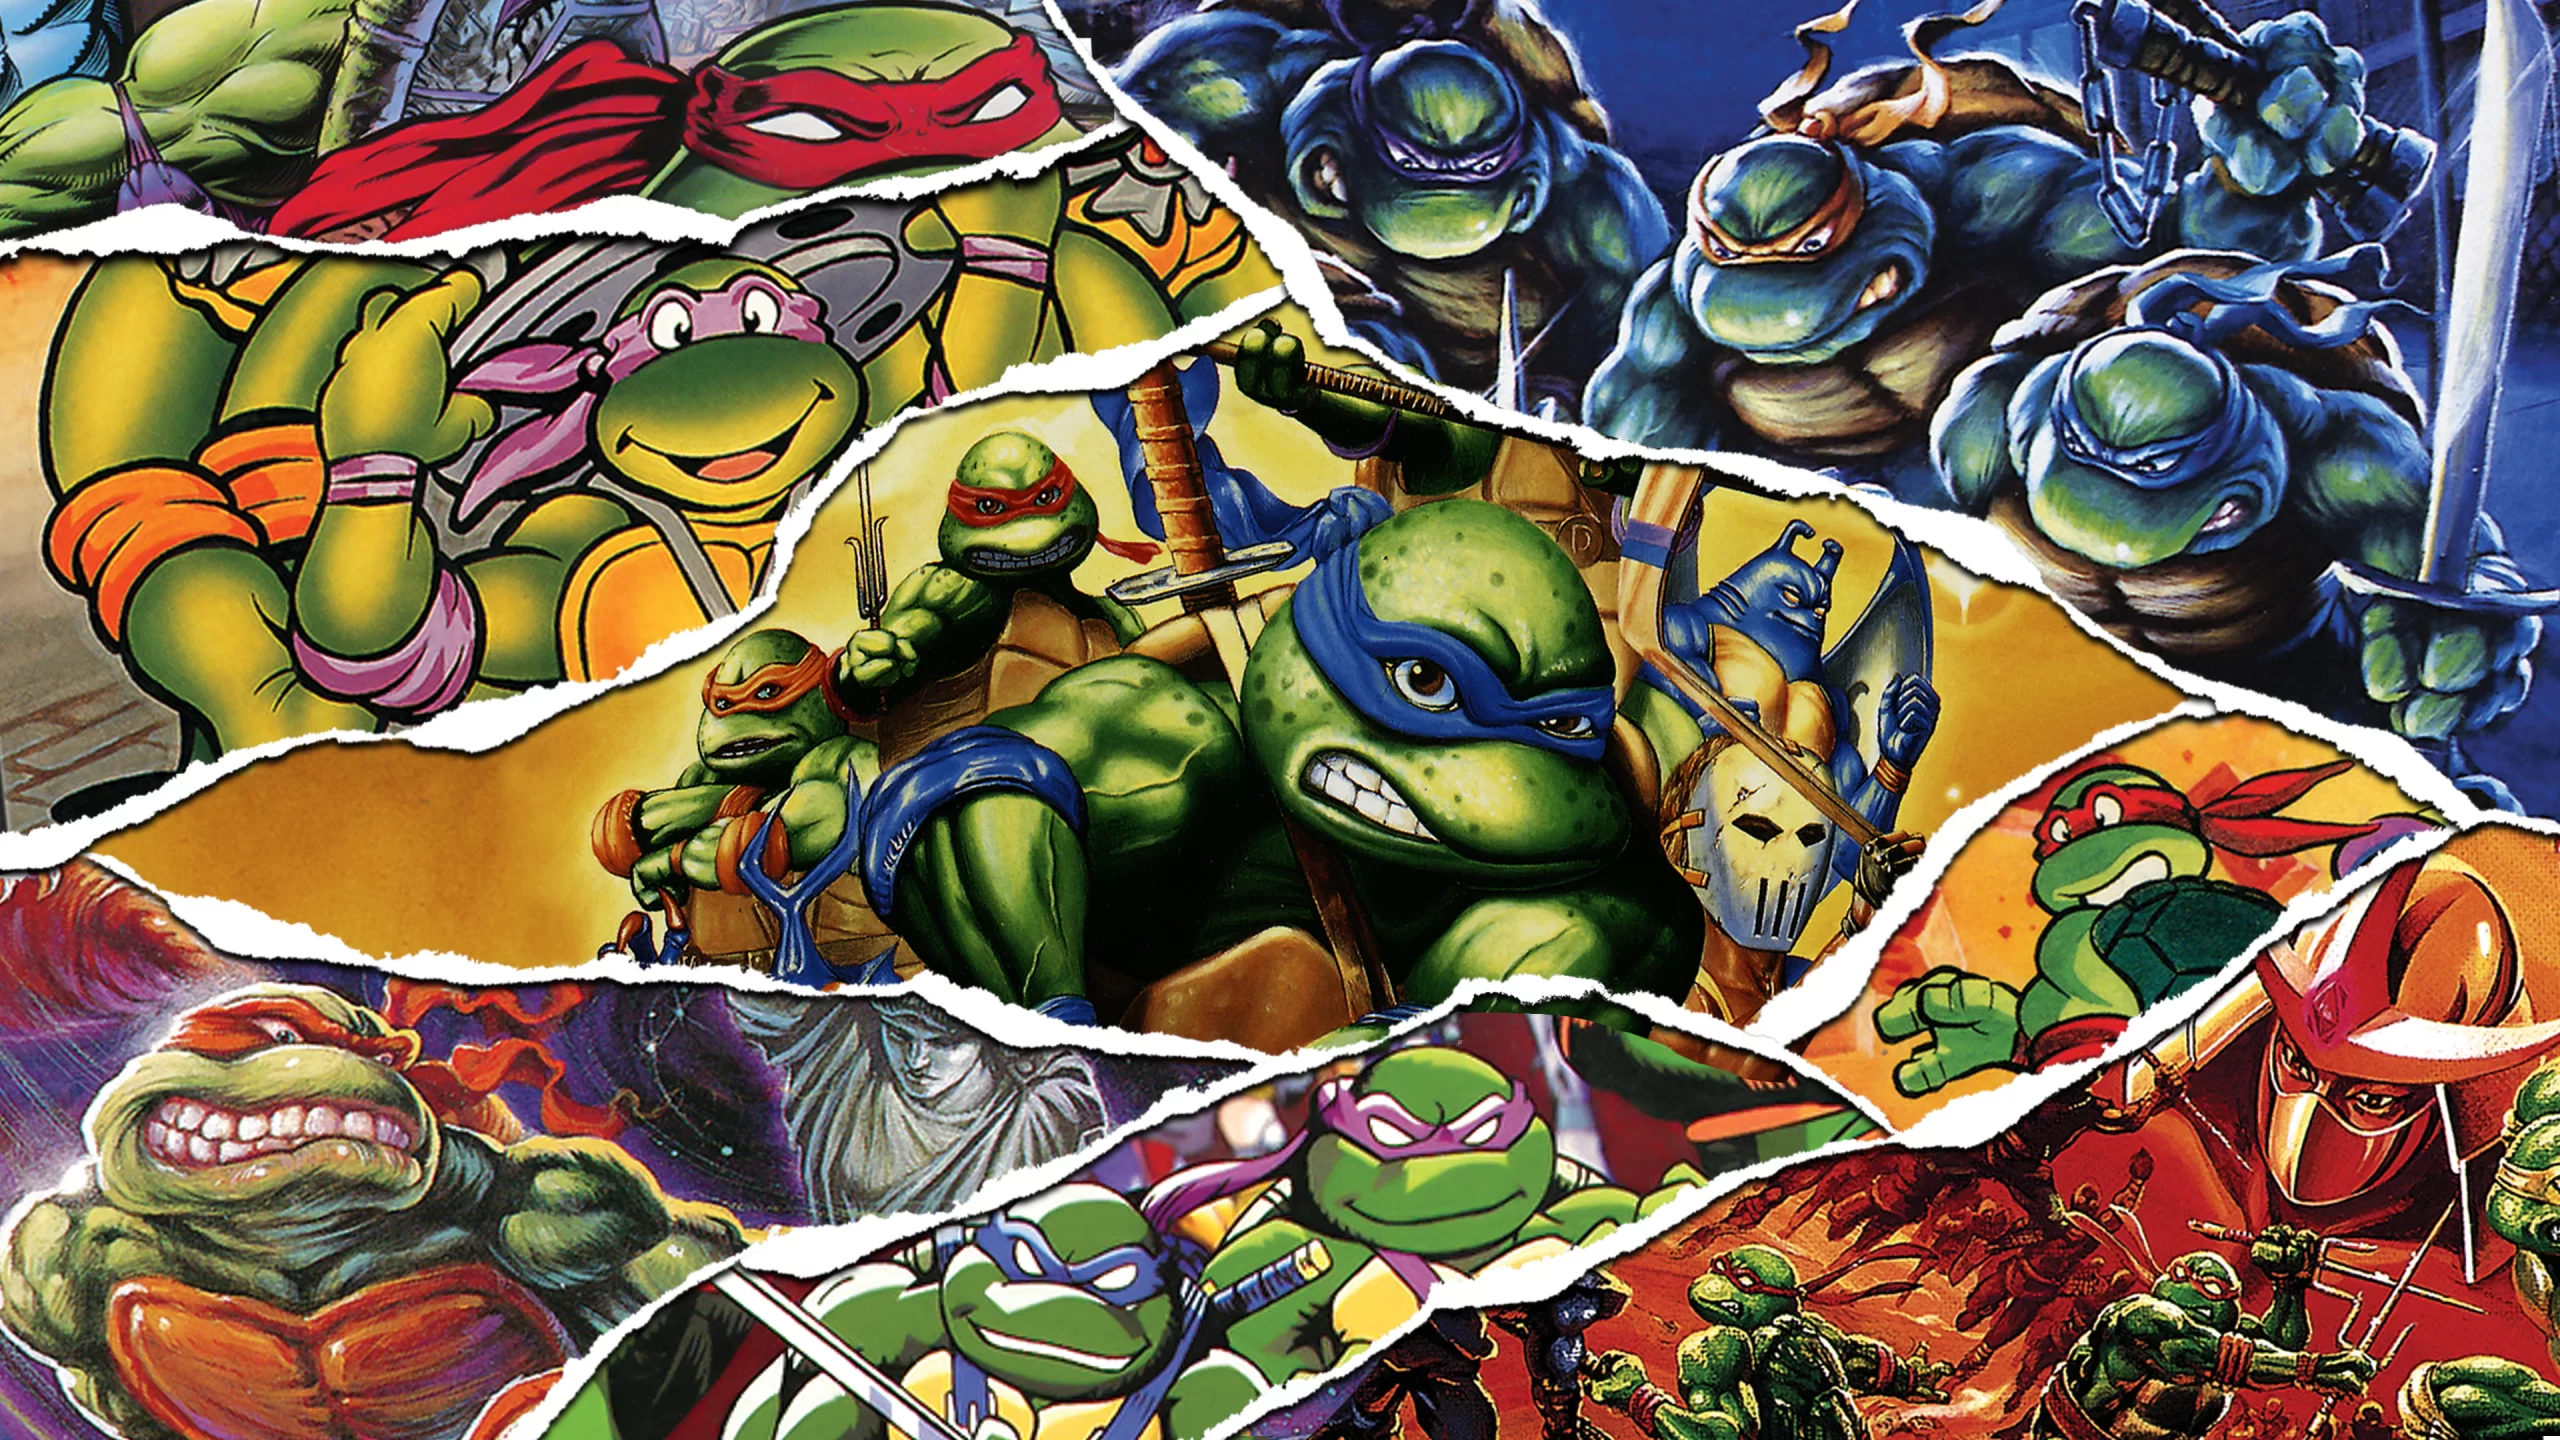 Teenage Turtles: The Cowabunga Ninja Digitally Switch) Downloaded – Collection Review: (Nintendo Mutant